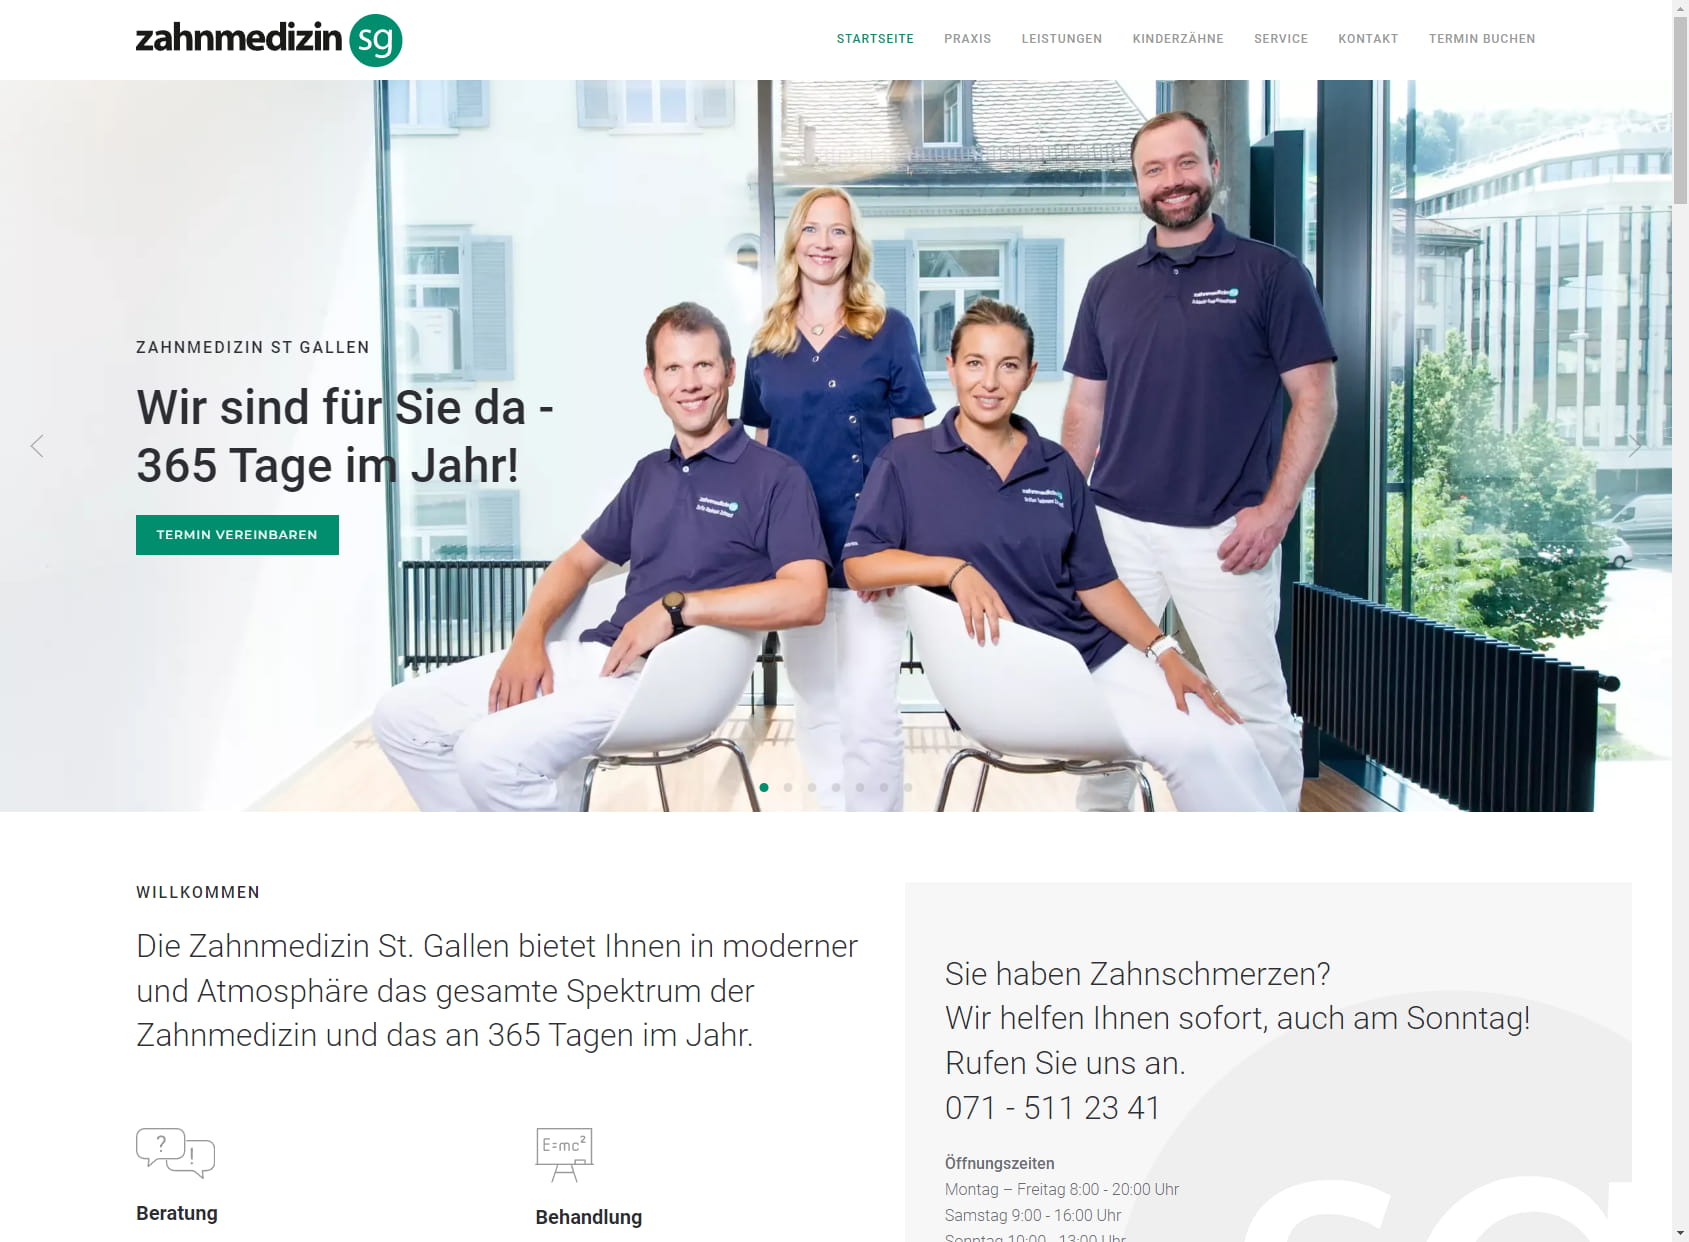 Zahnmedizin St. Gallen Dres. med. dent. Backmann, Garaffa